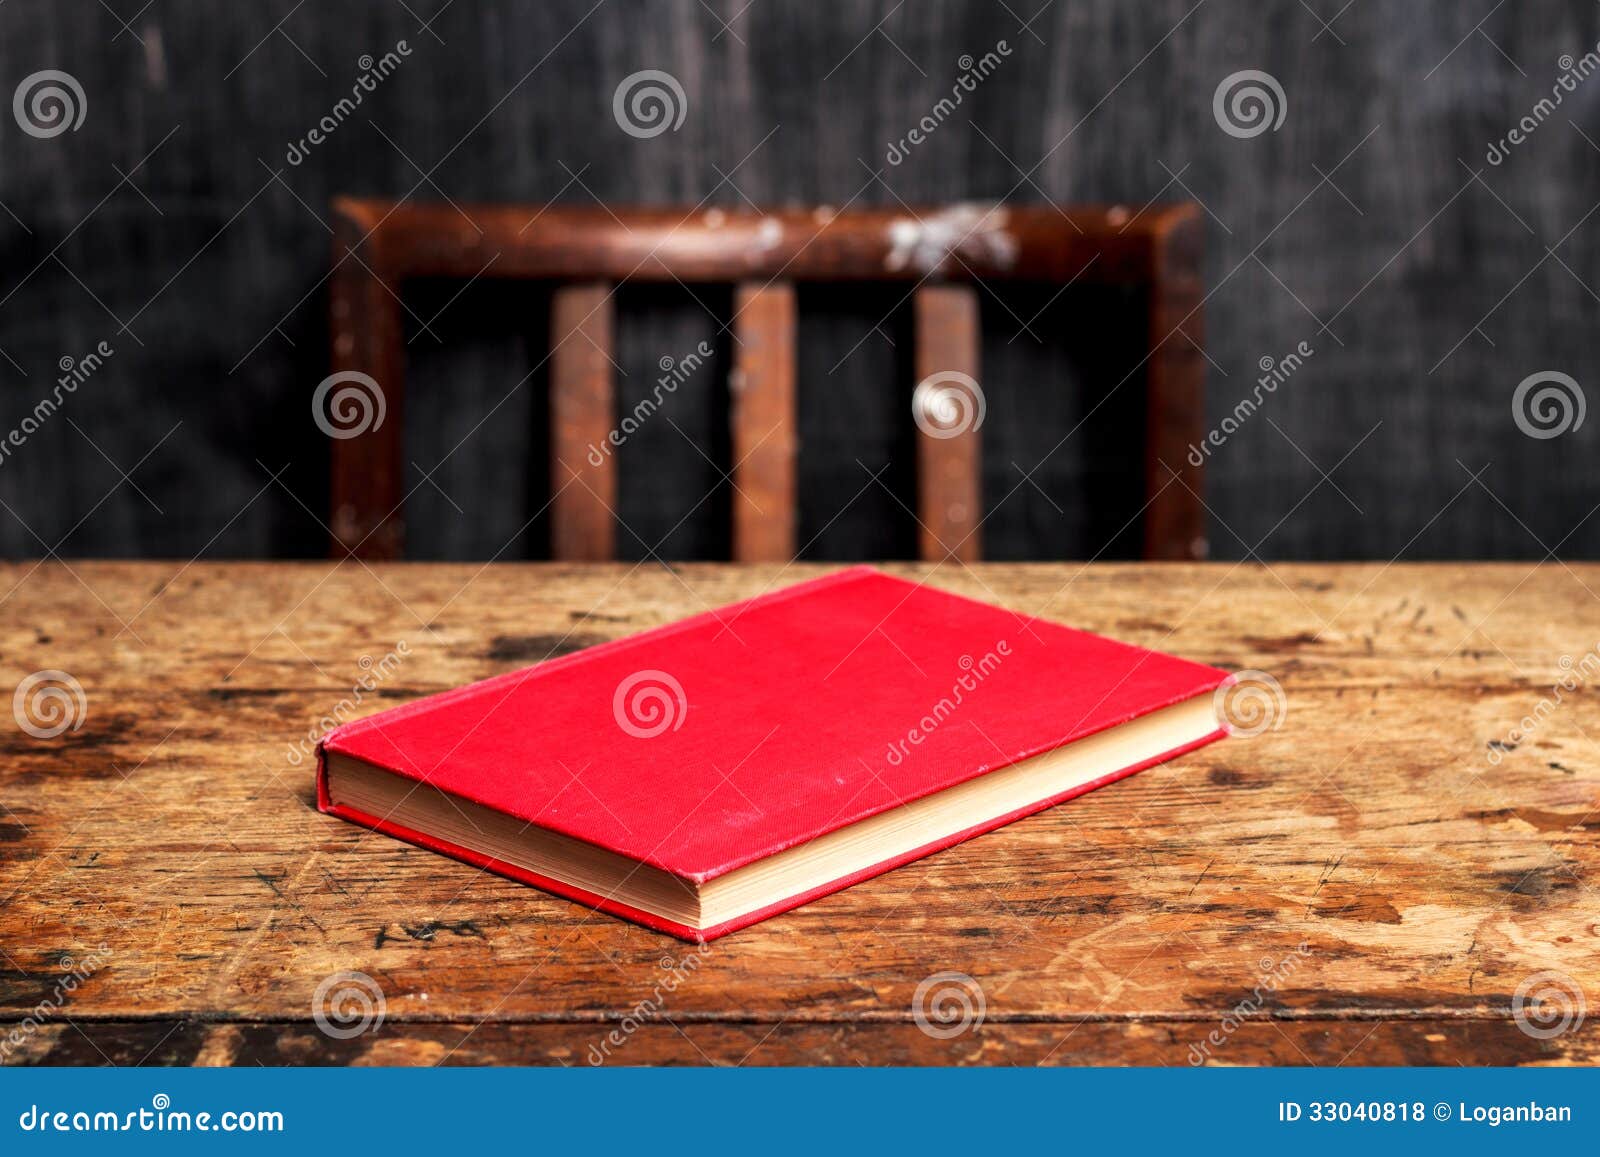 Вес книги лежащей на столе